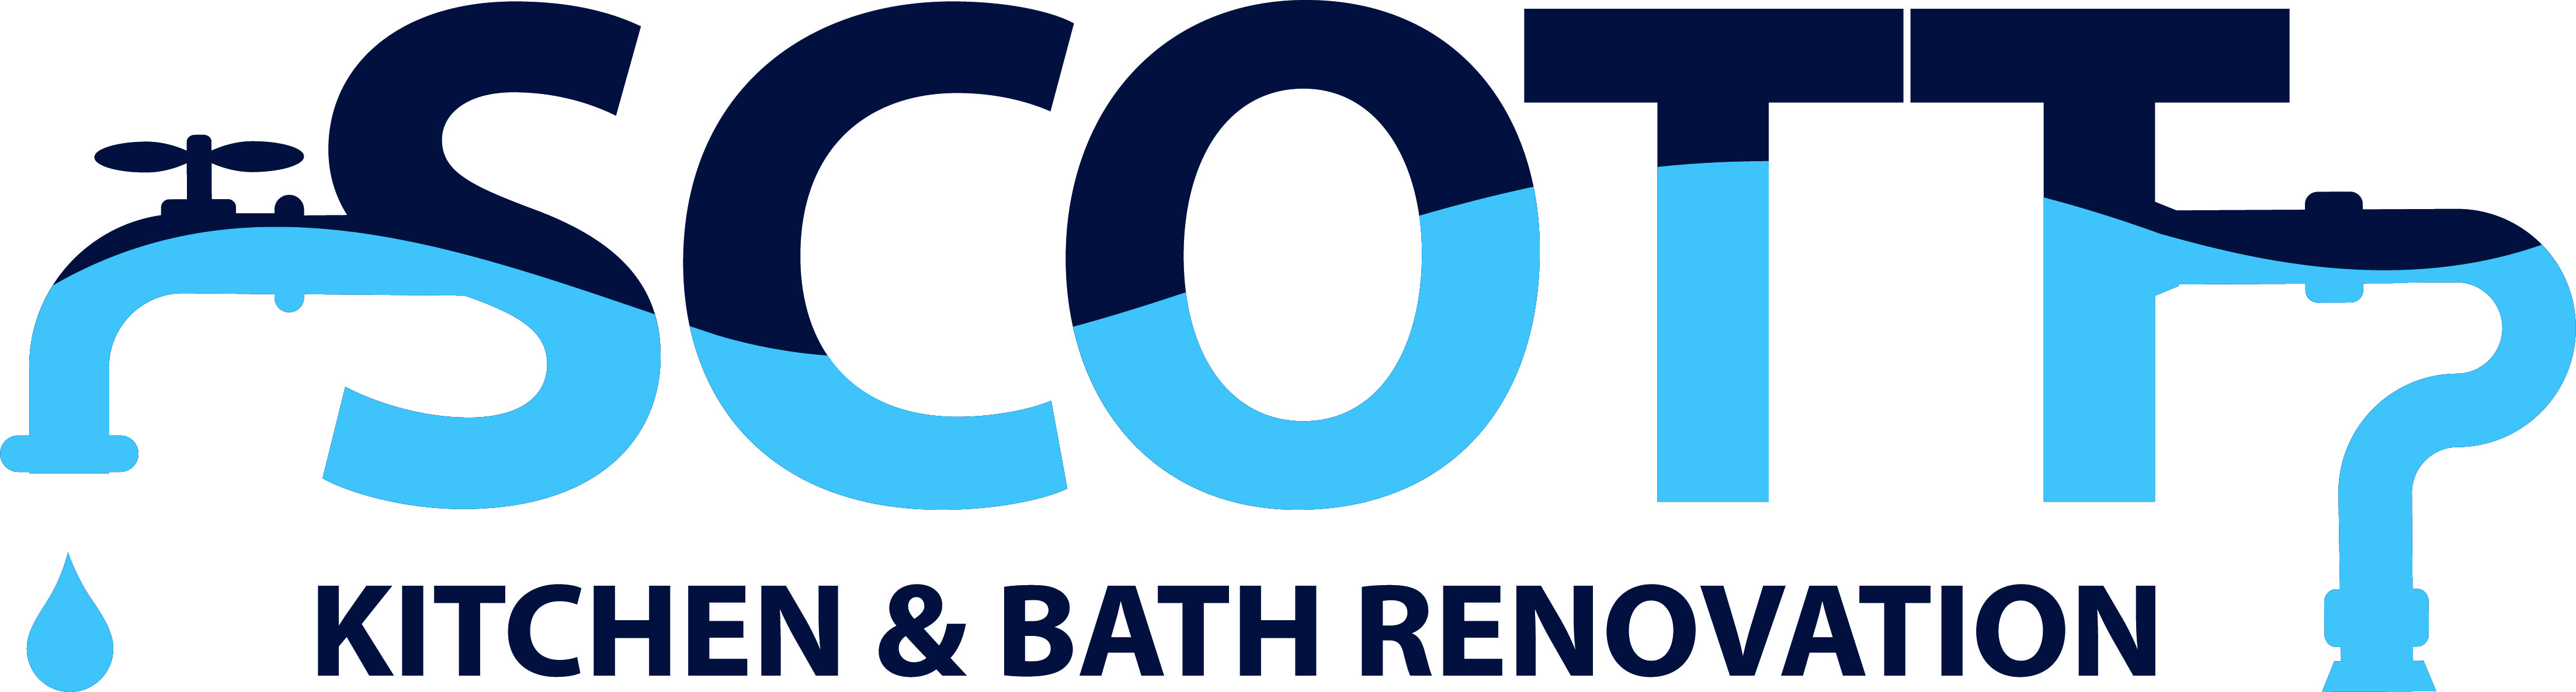 Scott Kitchen & Bath Renovation, LLC logo